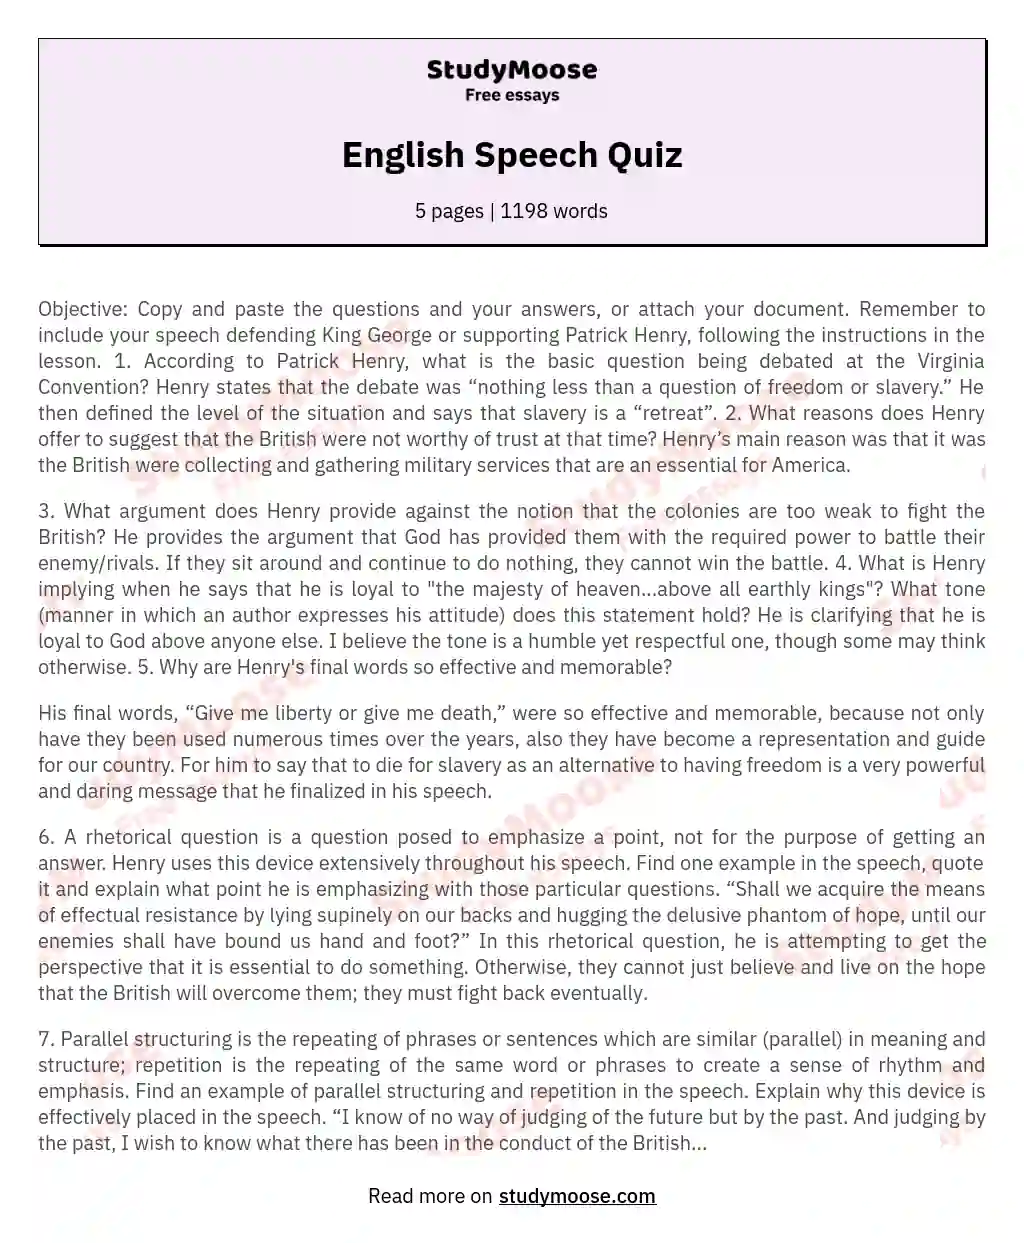 English Speech Quiz